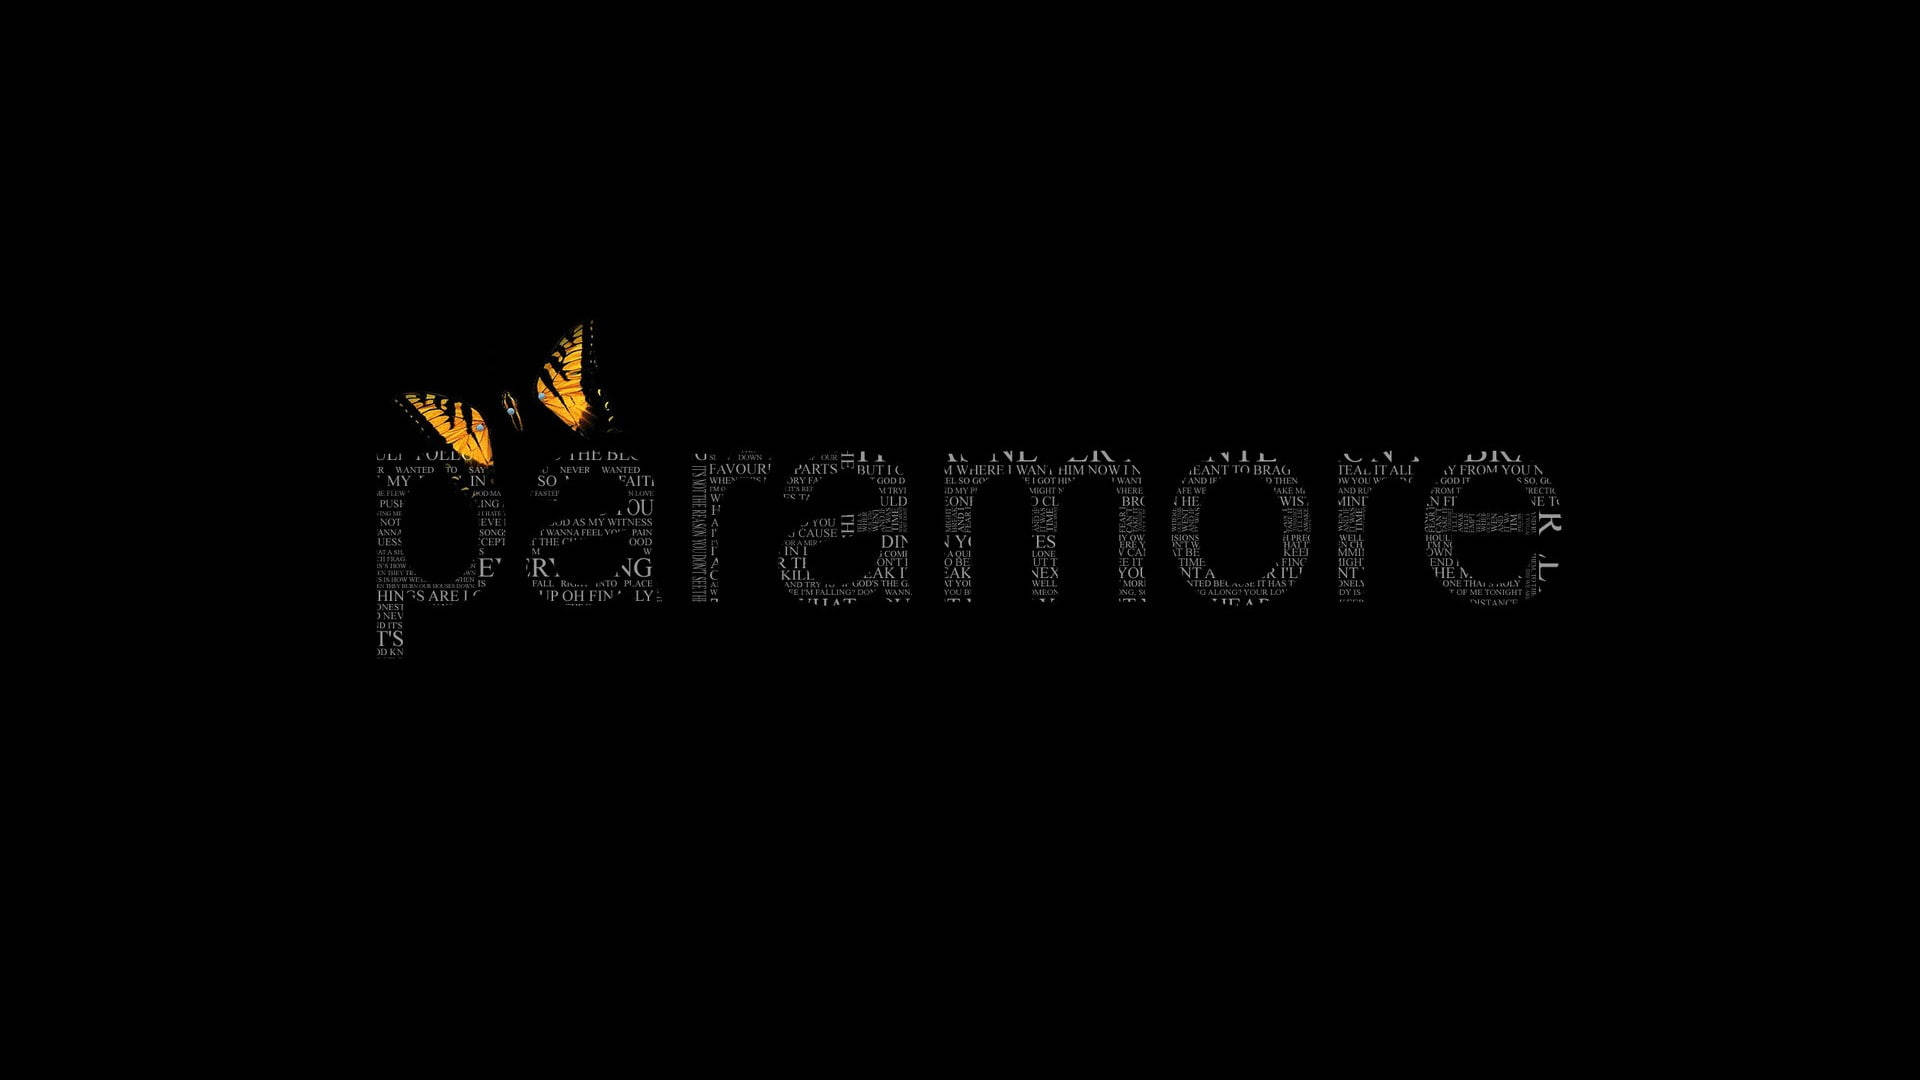 Paramore Brand New Eyes Background